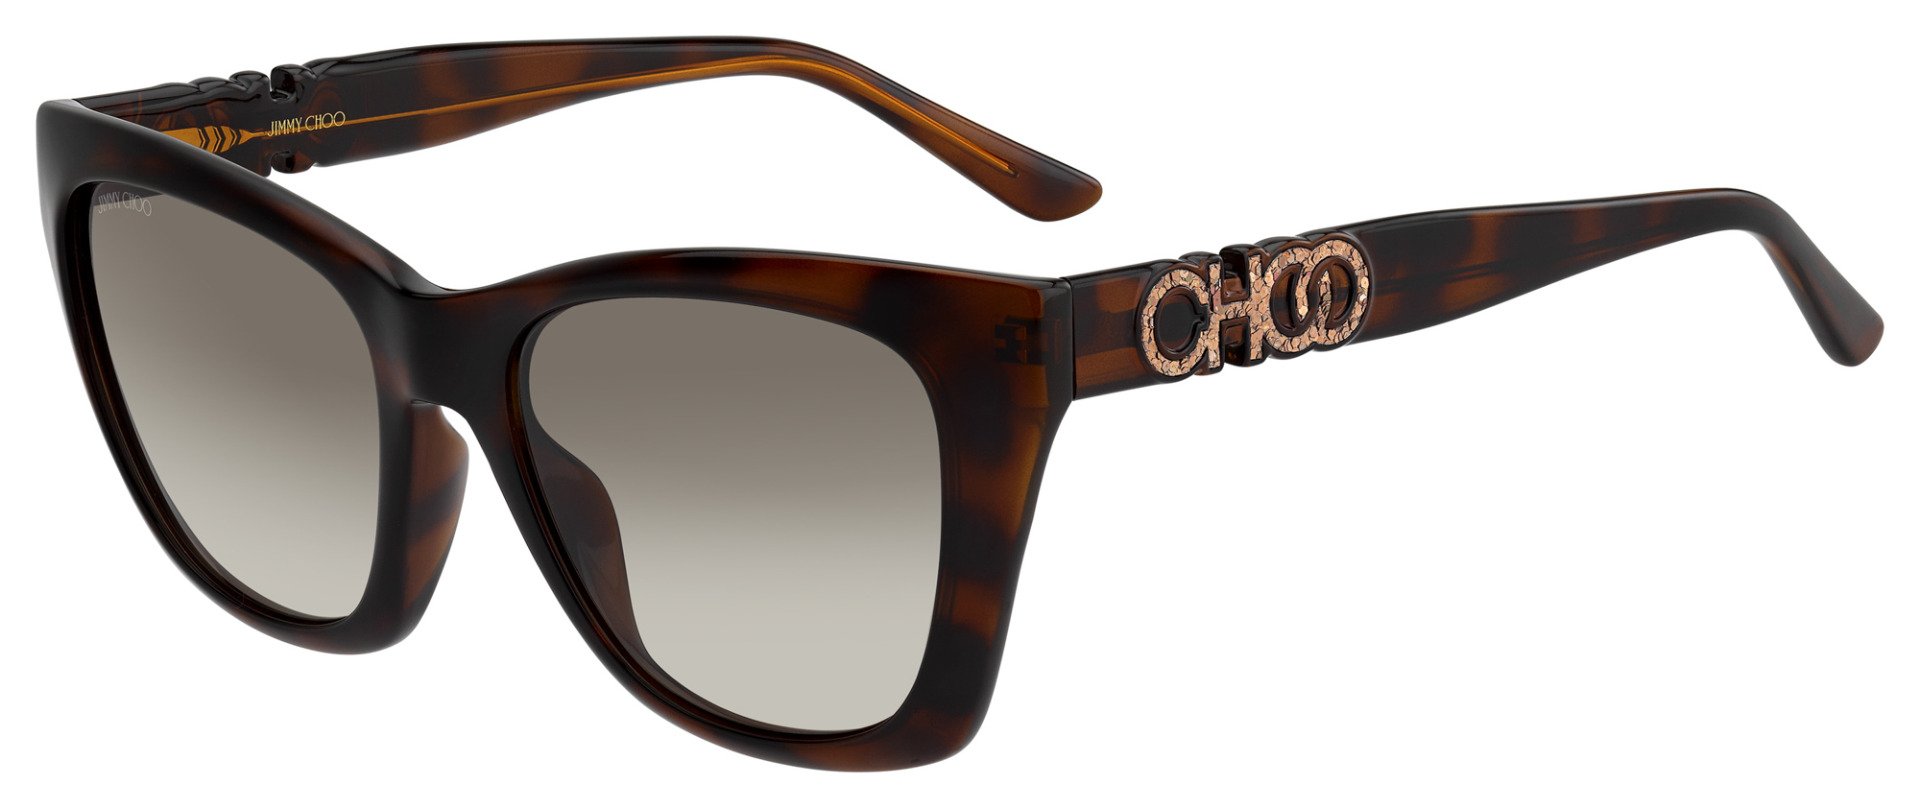 Black Sweater Sunglasses Gay Street Gucci Belt Bag Denim Jimmy Choo  Designer Le Specs Off SHoulder Red Lips NYC Fall 10 - Olivia Jeanette